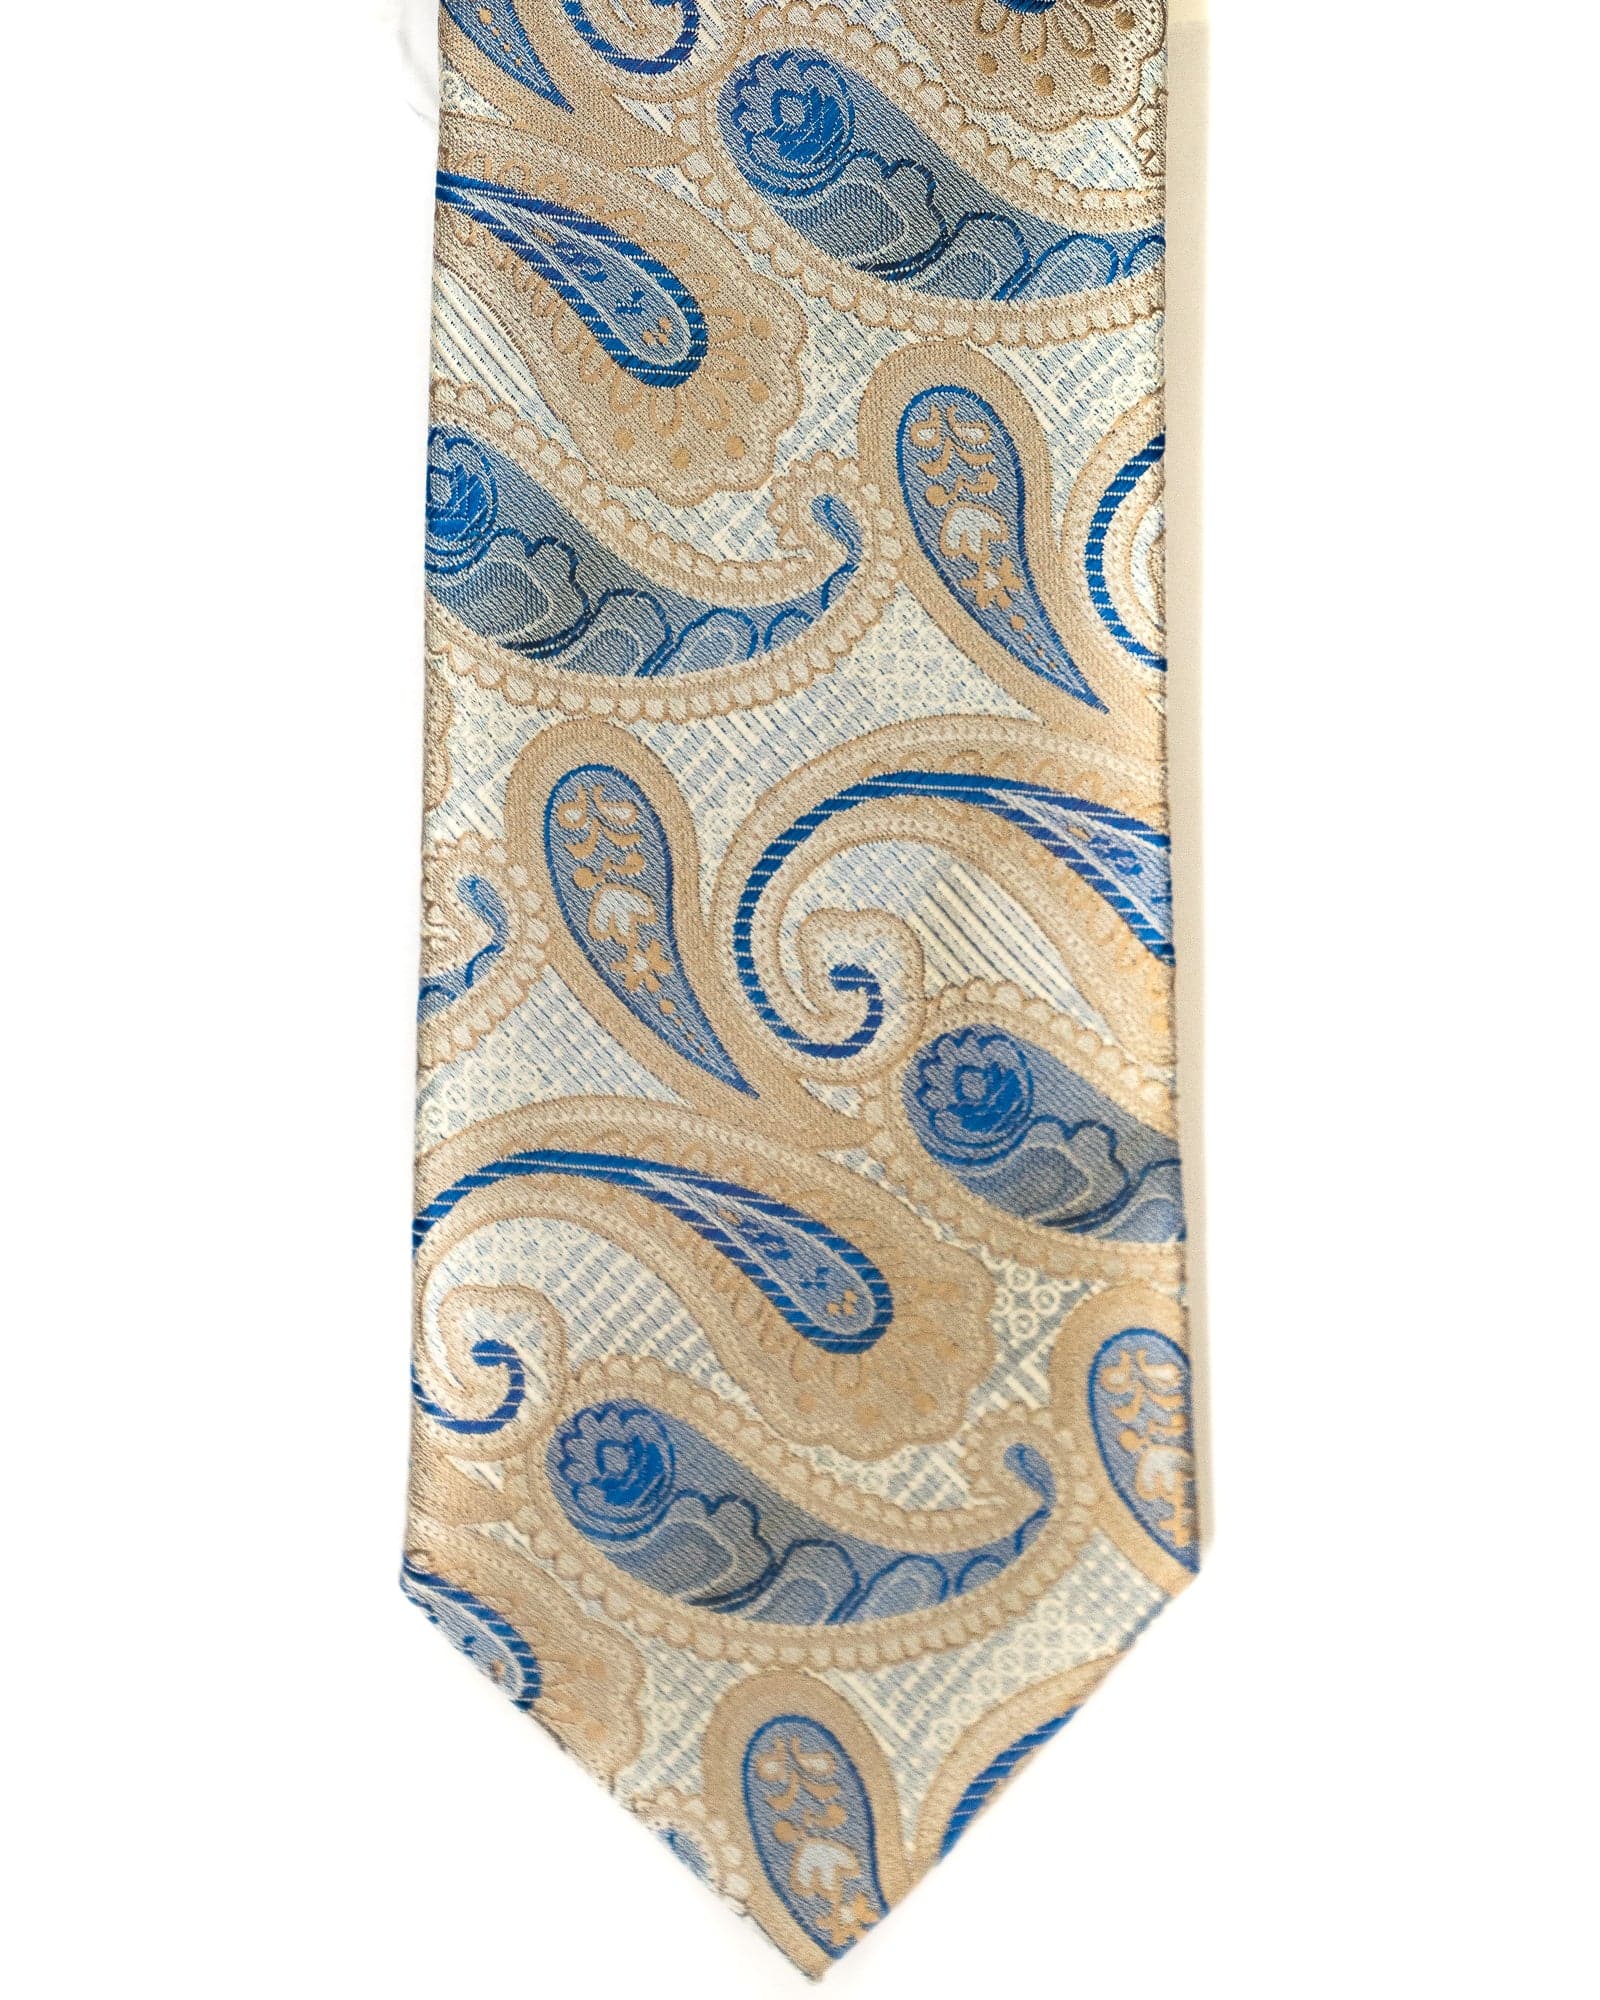 Venturi Uomo Paisley Tie in Tan with Blue - Rainwater's Men's Clothing and Tuxedo Rental